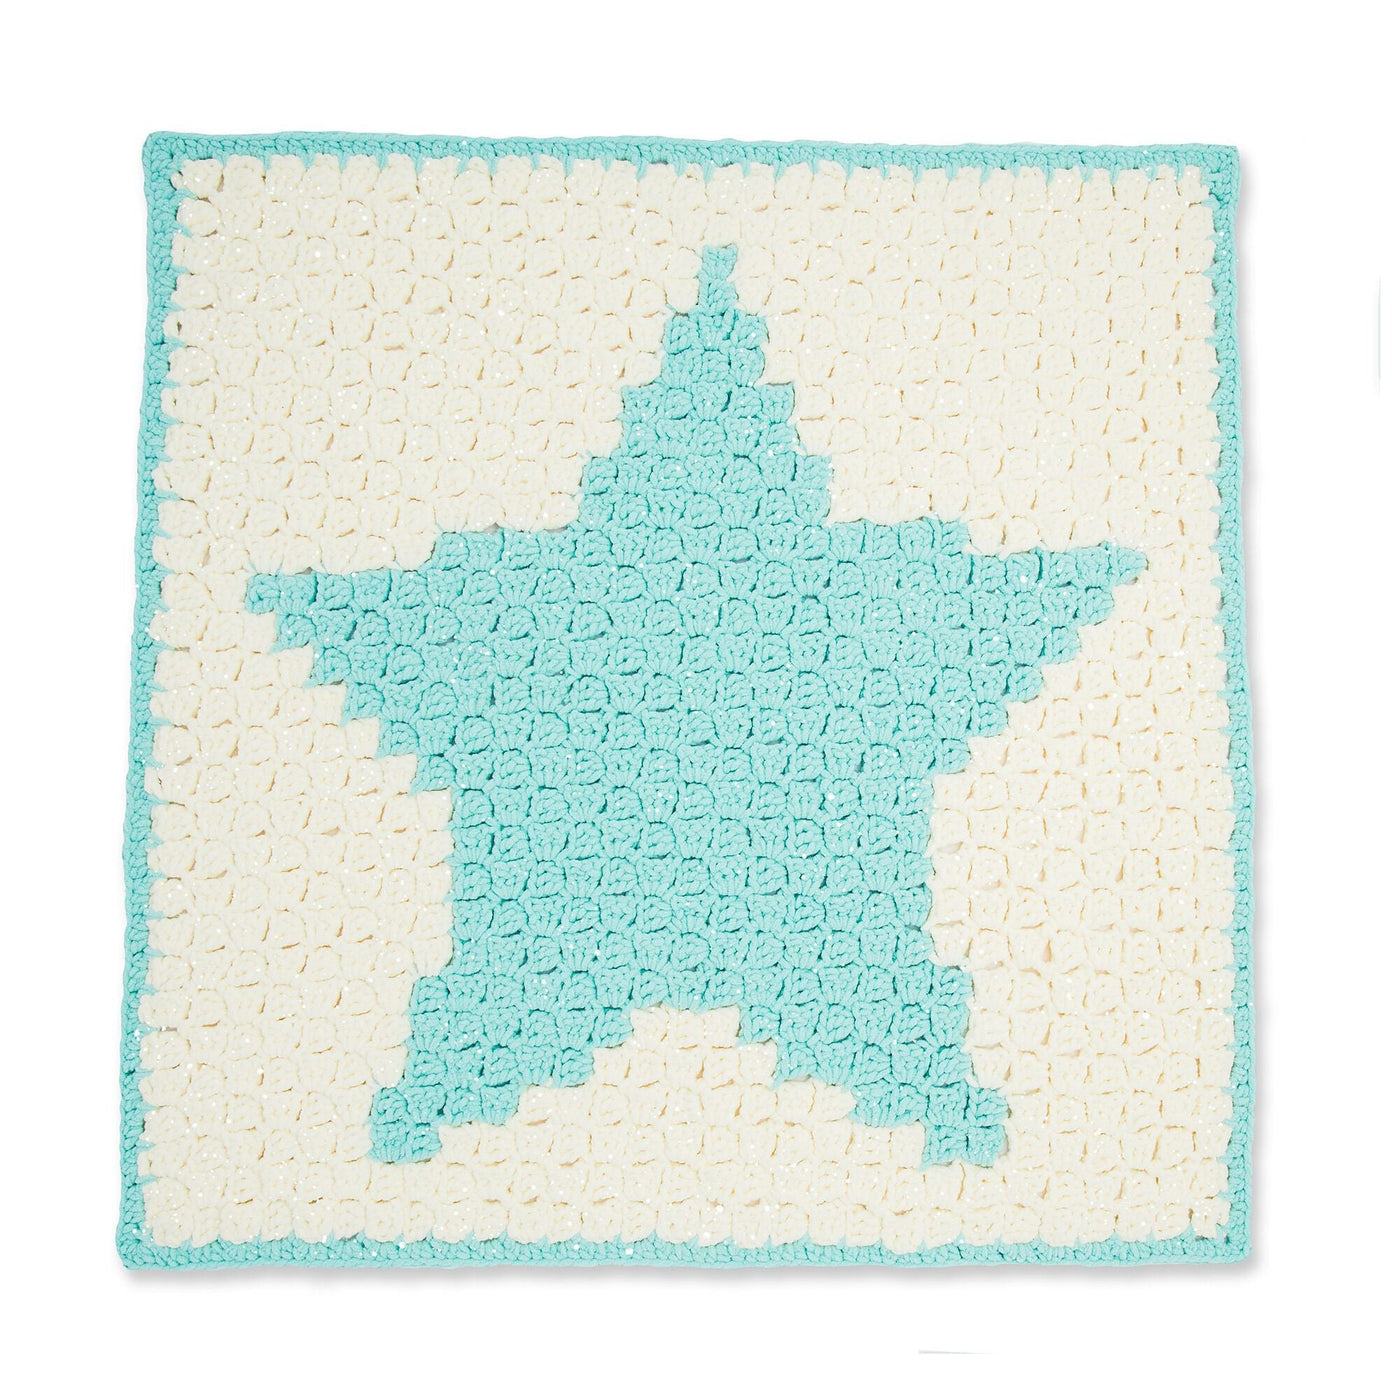 CROCHET PATTERN DOWNLOAD - Bernat Baby Blanket Sparkle C2C Big Star Crochet Blanket